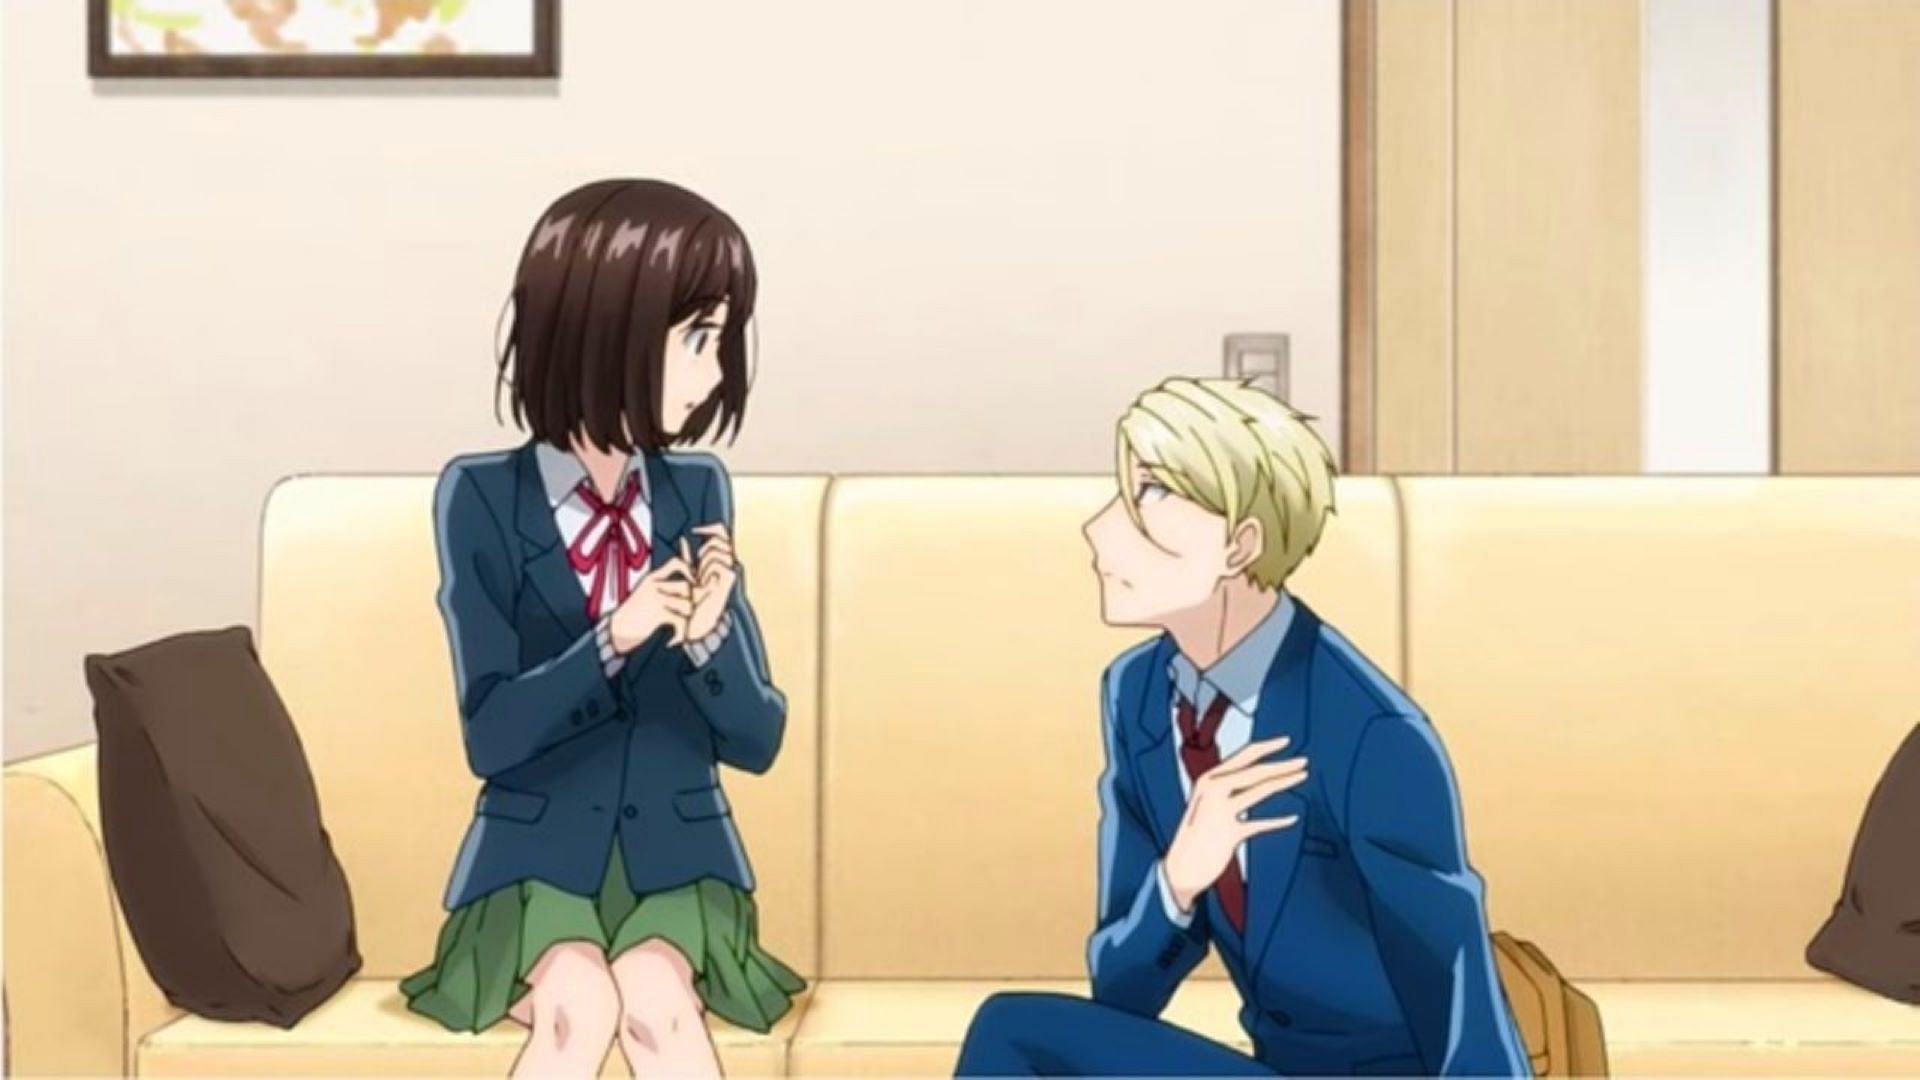 Amakusa tries to woo Ichika (Image via Kokimo, Ichijinsha, Studio Nomad)